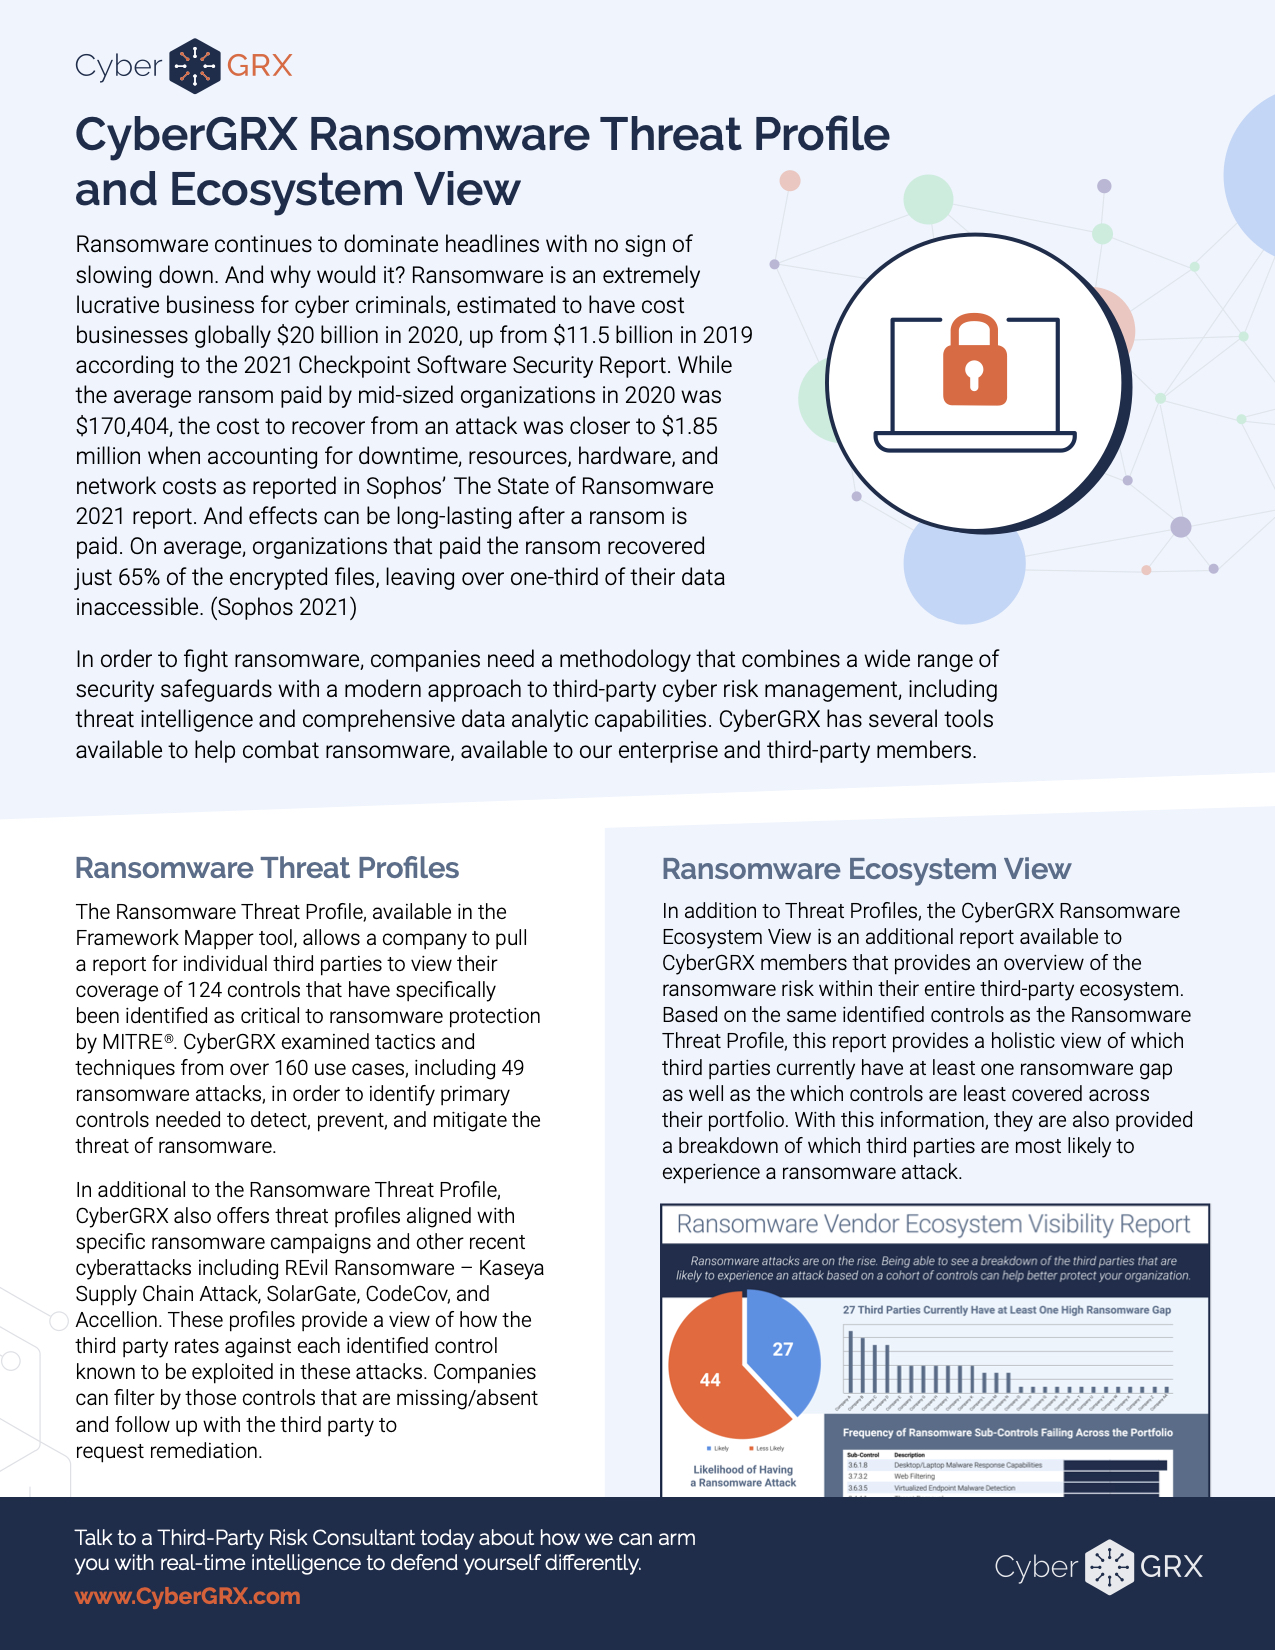 CyberGRX Ransomware Threat Profile & Ecosystem View